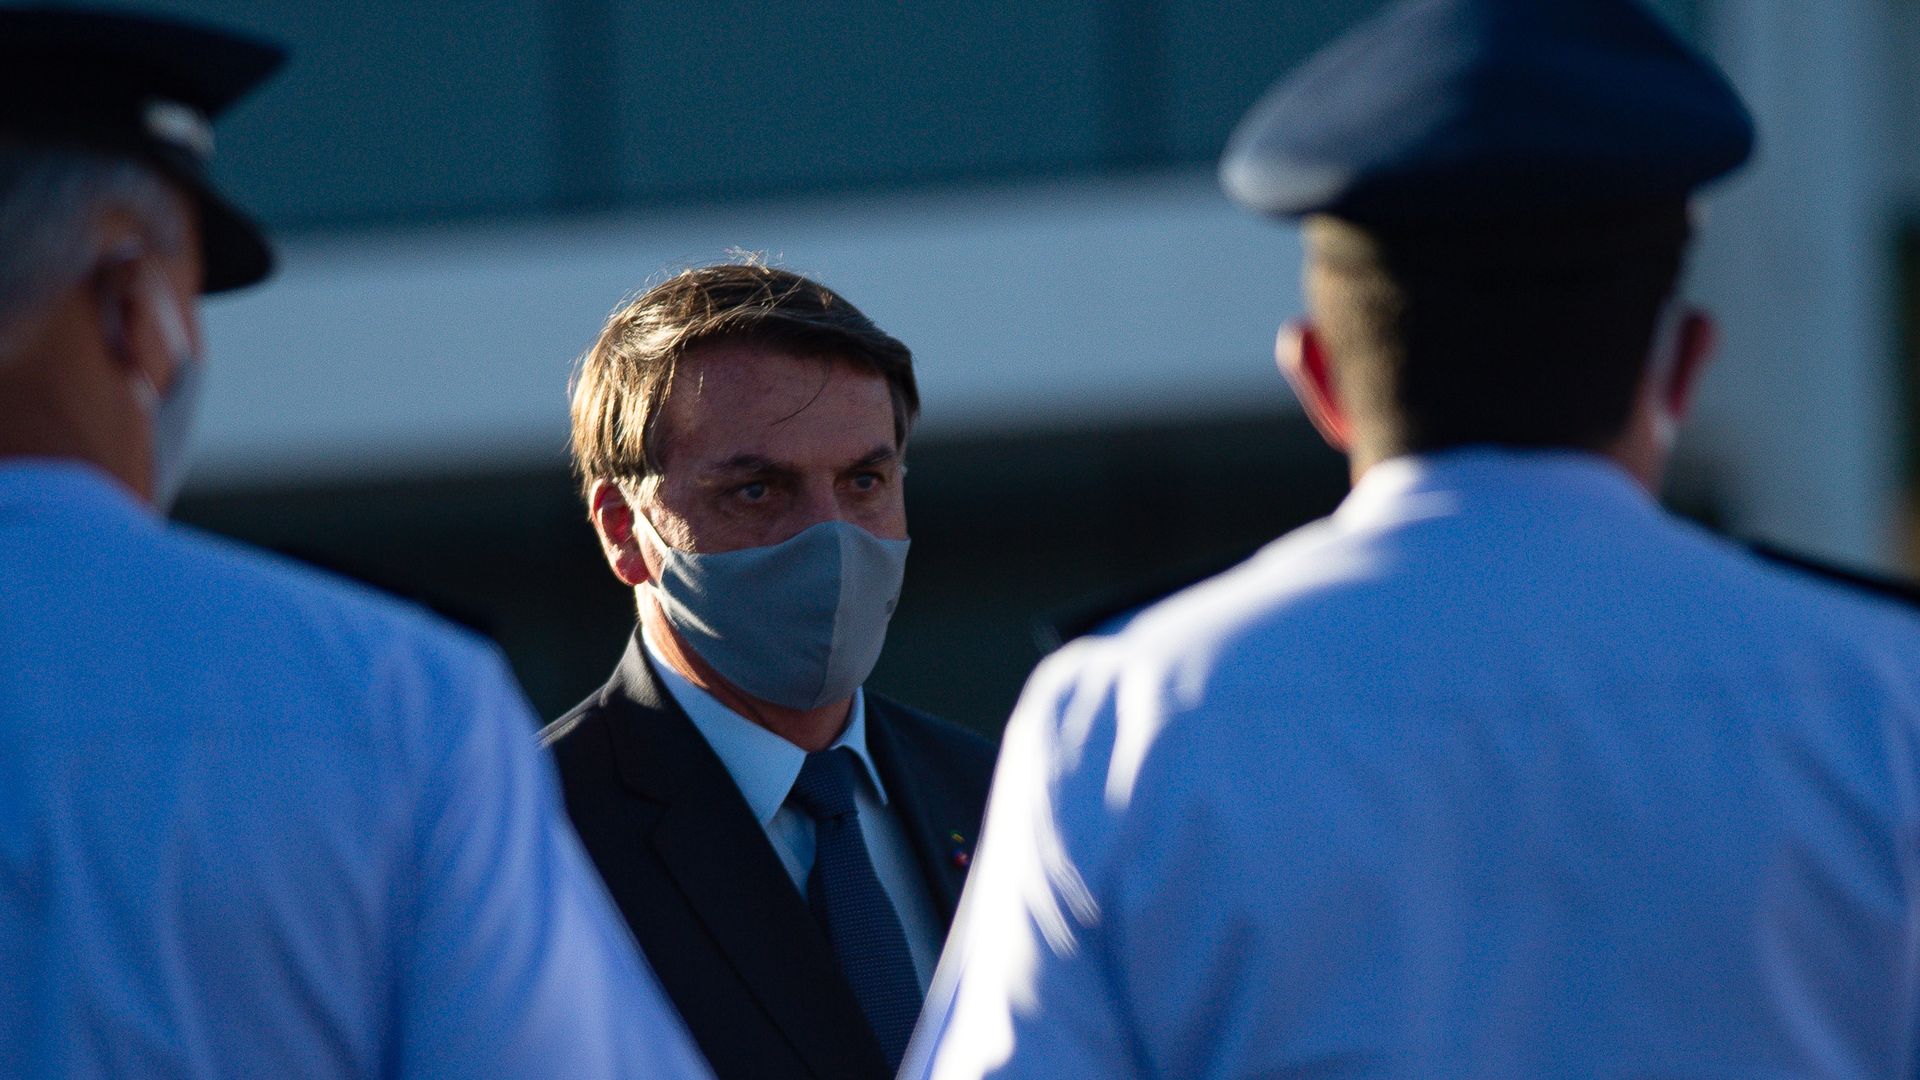 Bolsonaro wears a face mask